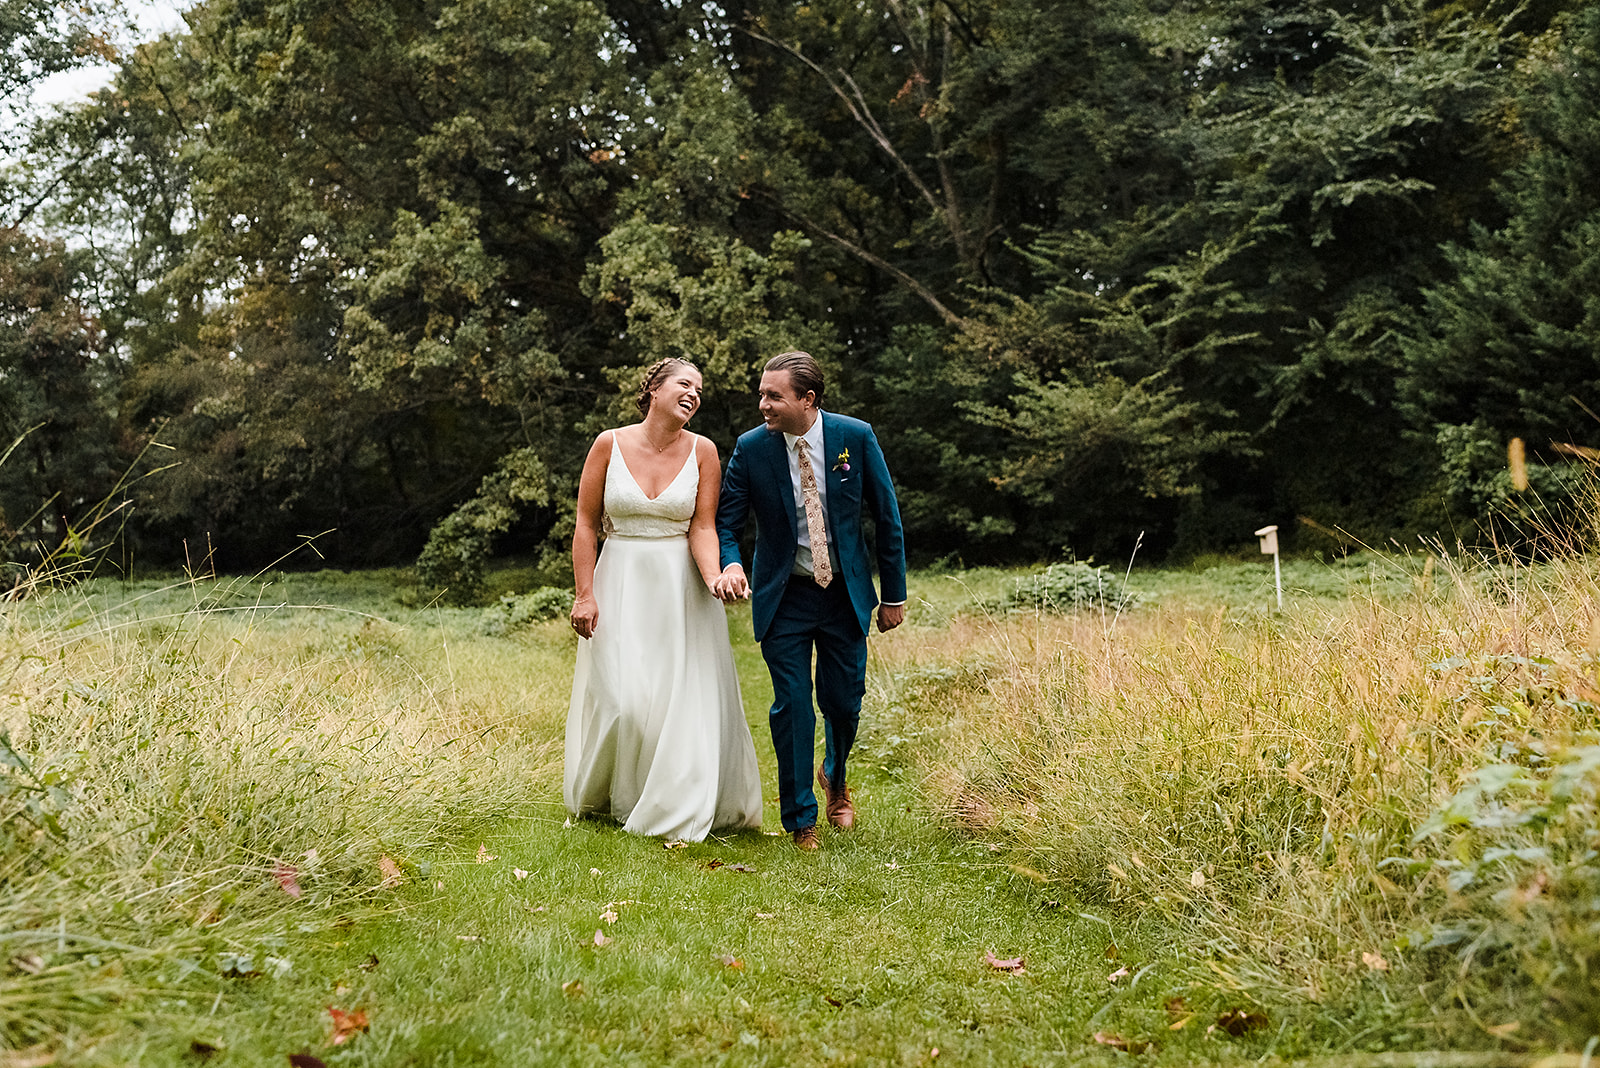 Walking bride and groom portrait in green gardens of Awbury Arboretum